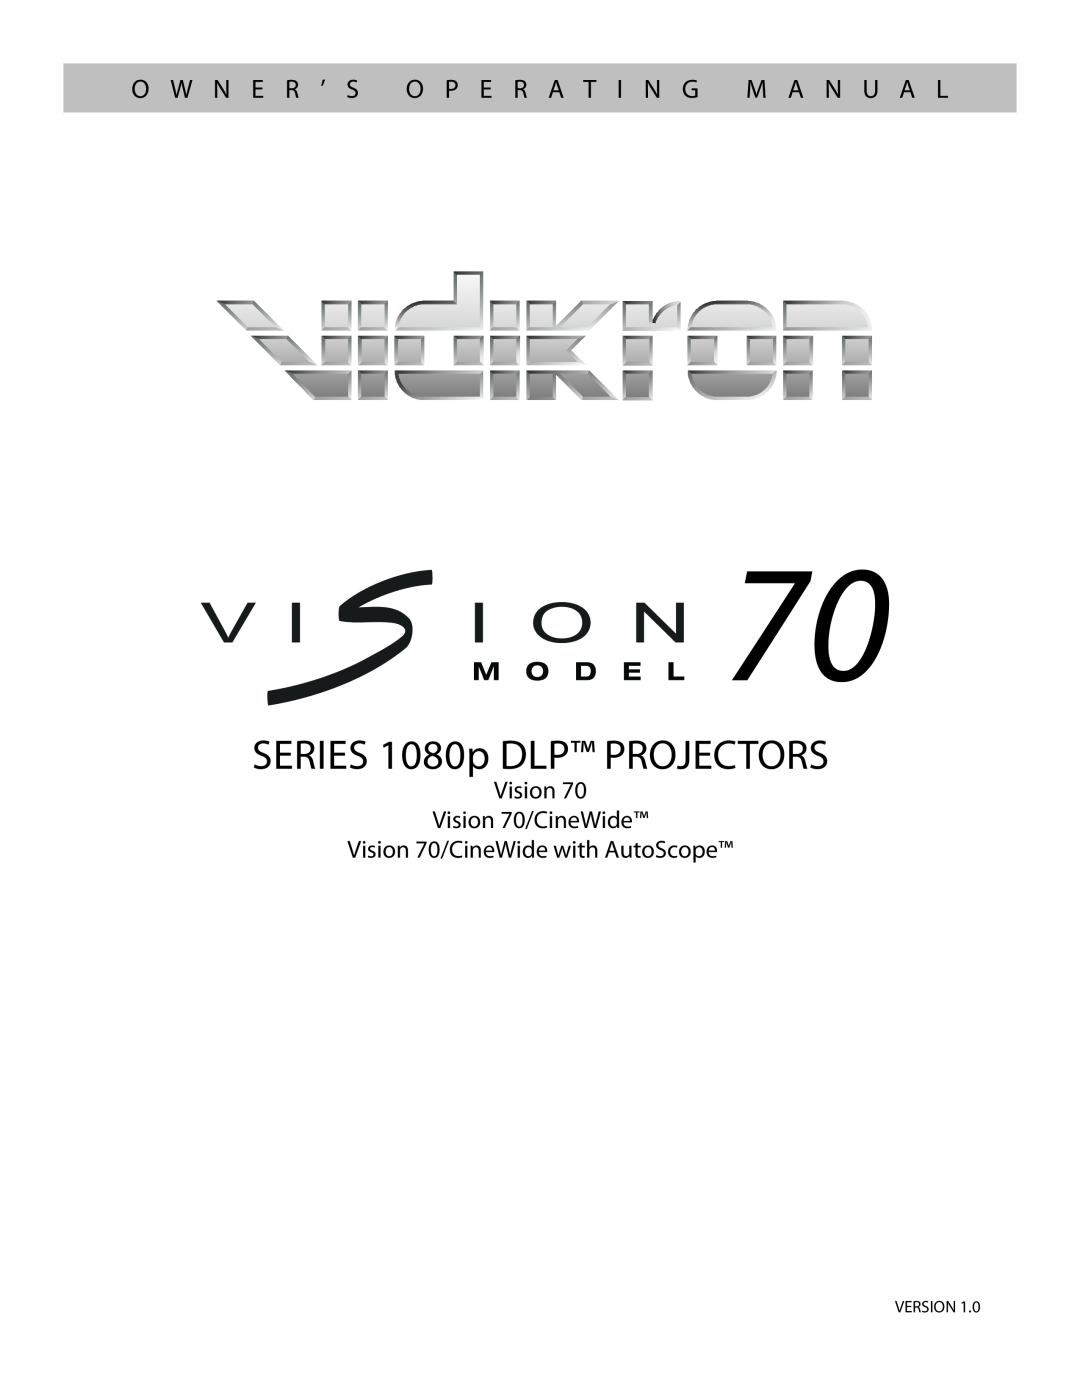 Vidikron manual SERIES 1080p DLP PROJECTORS, O W N E R ’ S O P E R A T I N G M A N U A L 